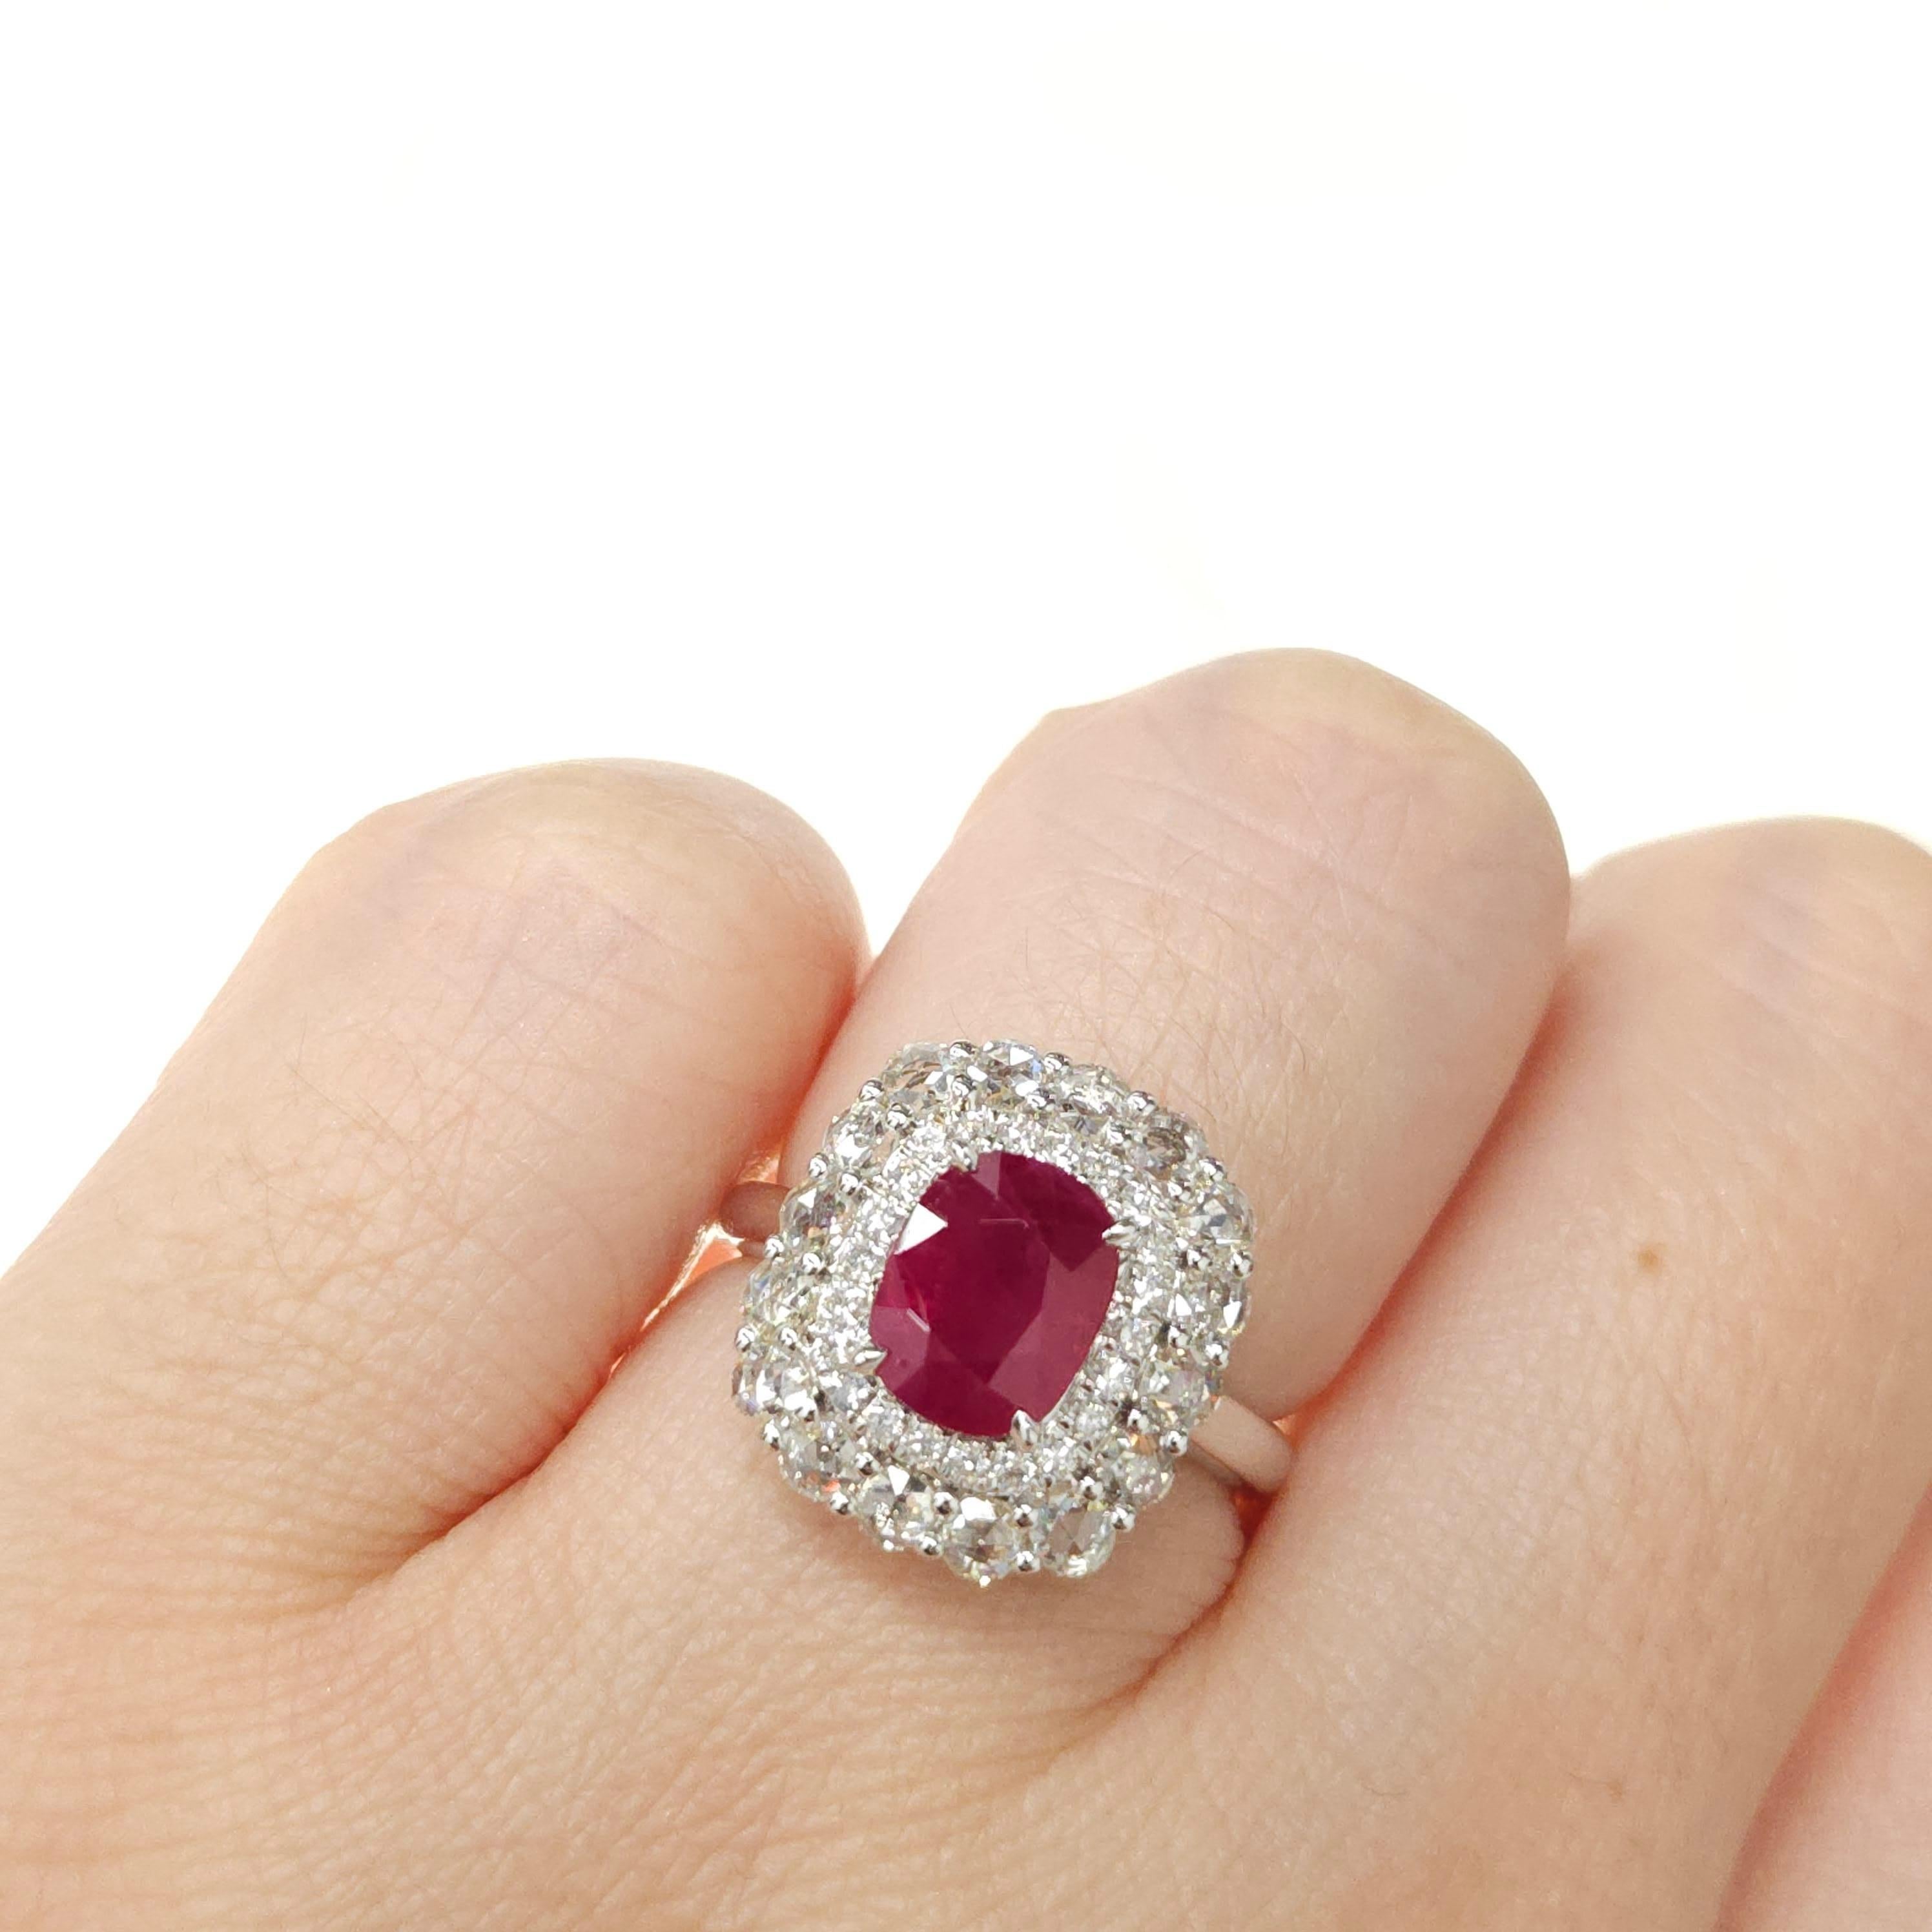 IGI Certified 2.26 Carat  Burma Ruby & Diamond Ring in 18K White Gold For Sale 1